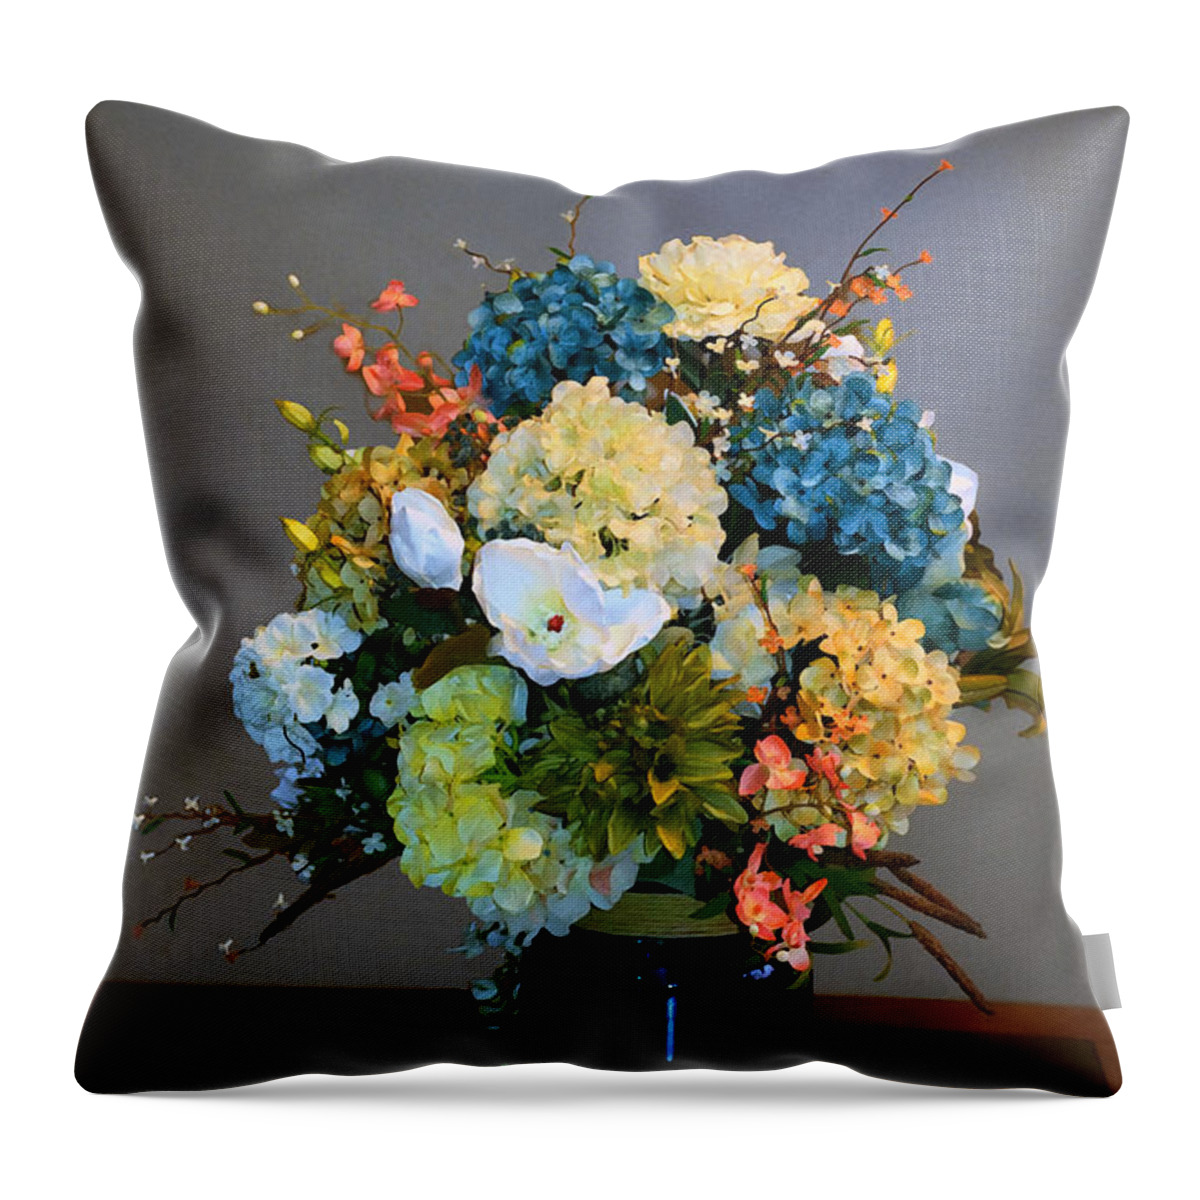 Masartstudio Throw Pillow featuring the mixed media Decorative Floral Mixed Media B3117 by Mas Art Studio